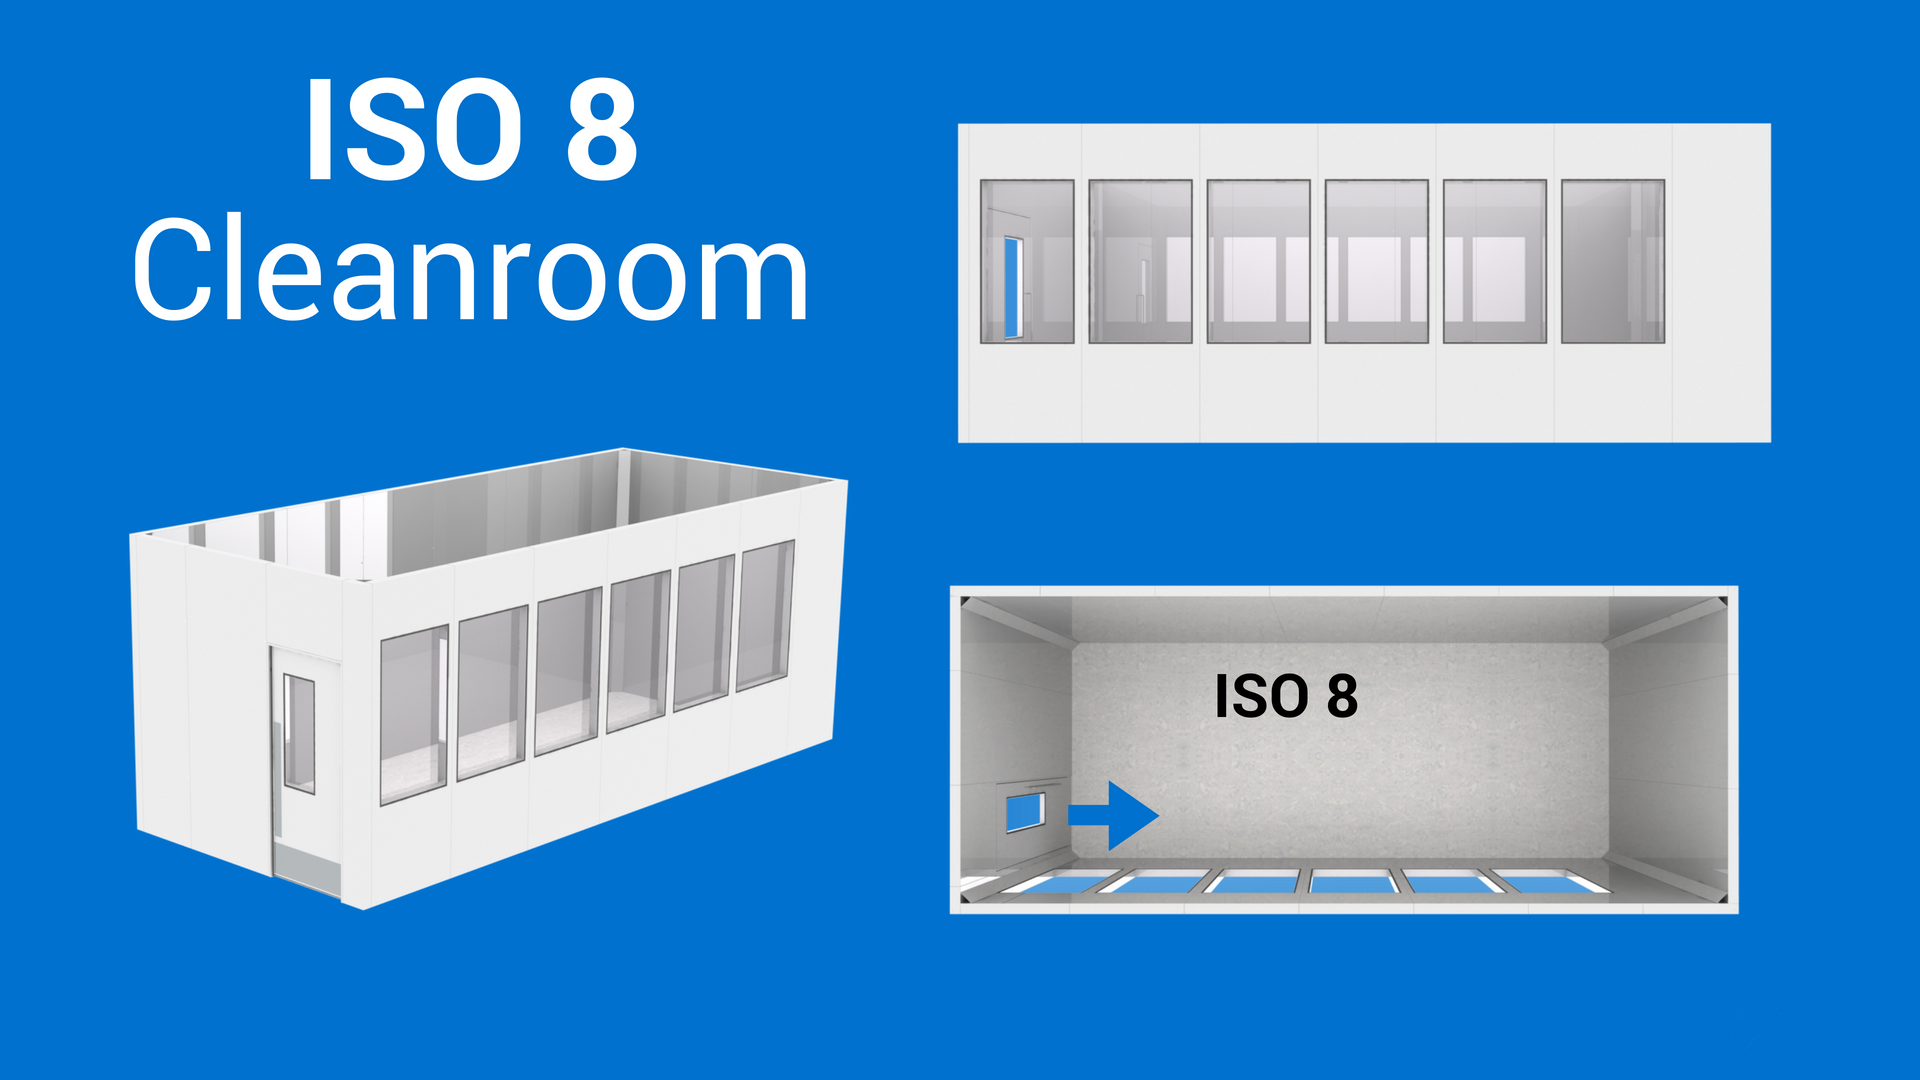 ISO 8 cleanroom